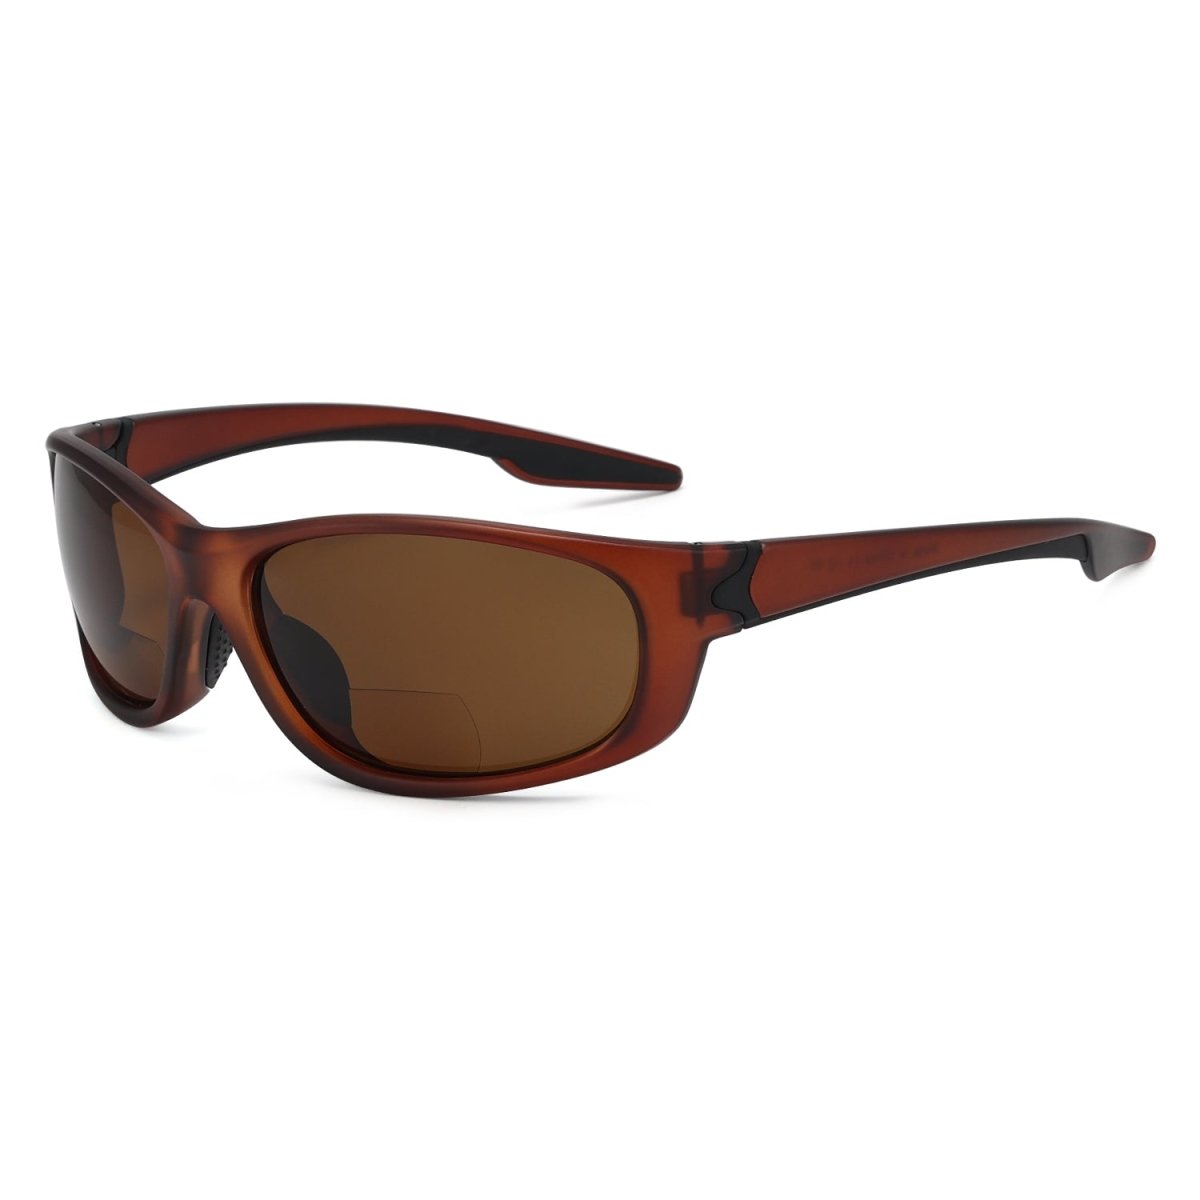 Tandi Bifocal Sunglasses- Only +1.50 Available – I Heart Eyewear